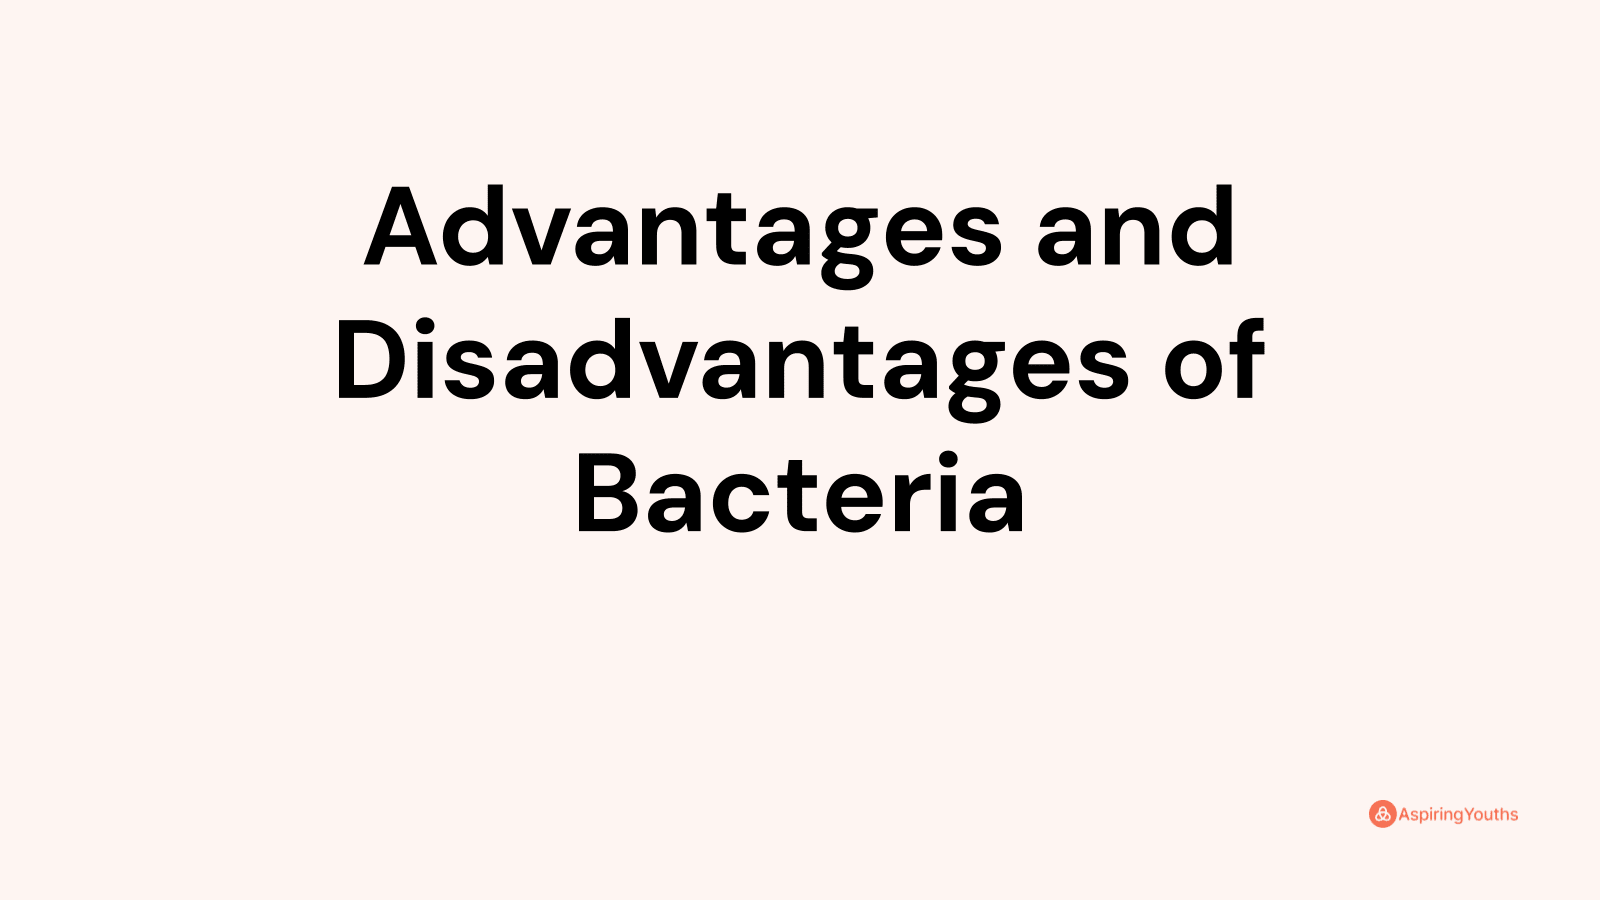 Advantages and disadvantages of Bacteria